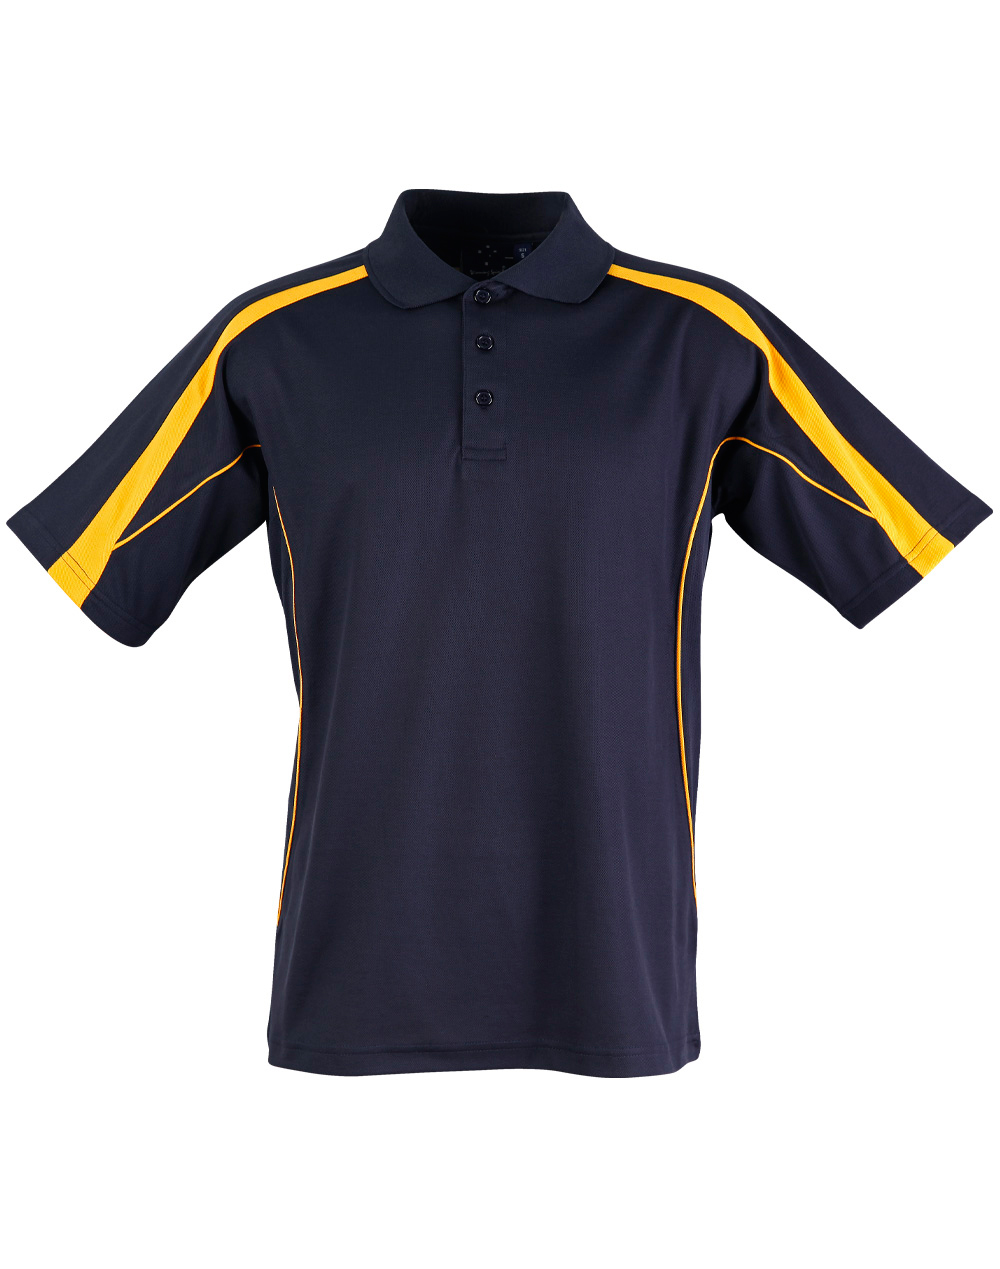 Custom (Navy Gold) Legend Polo Shirts for Men Online Perth Australia